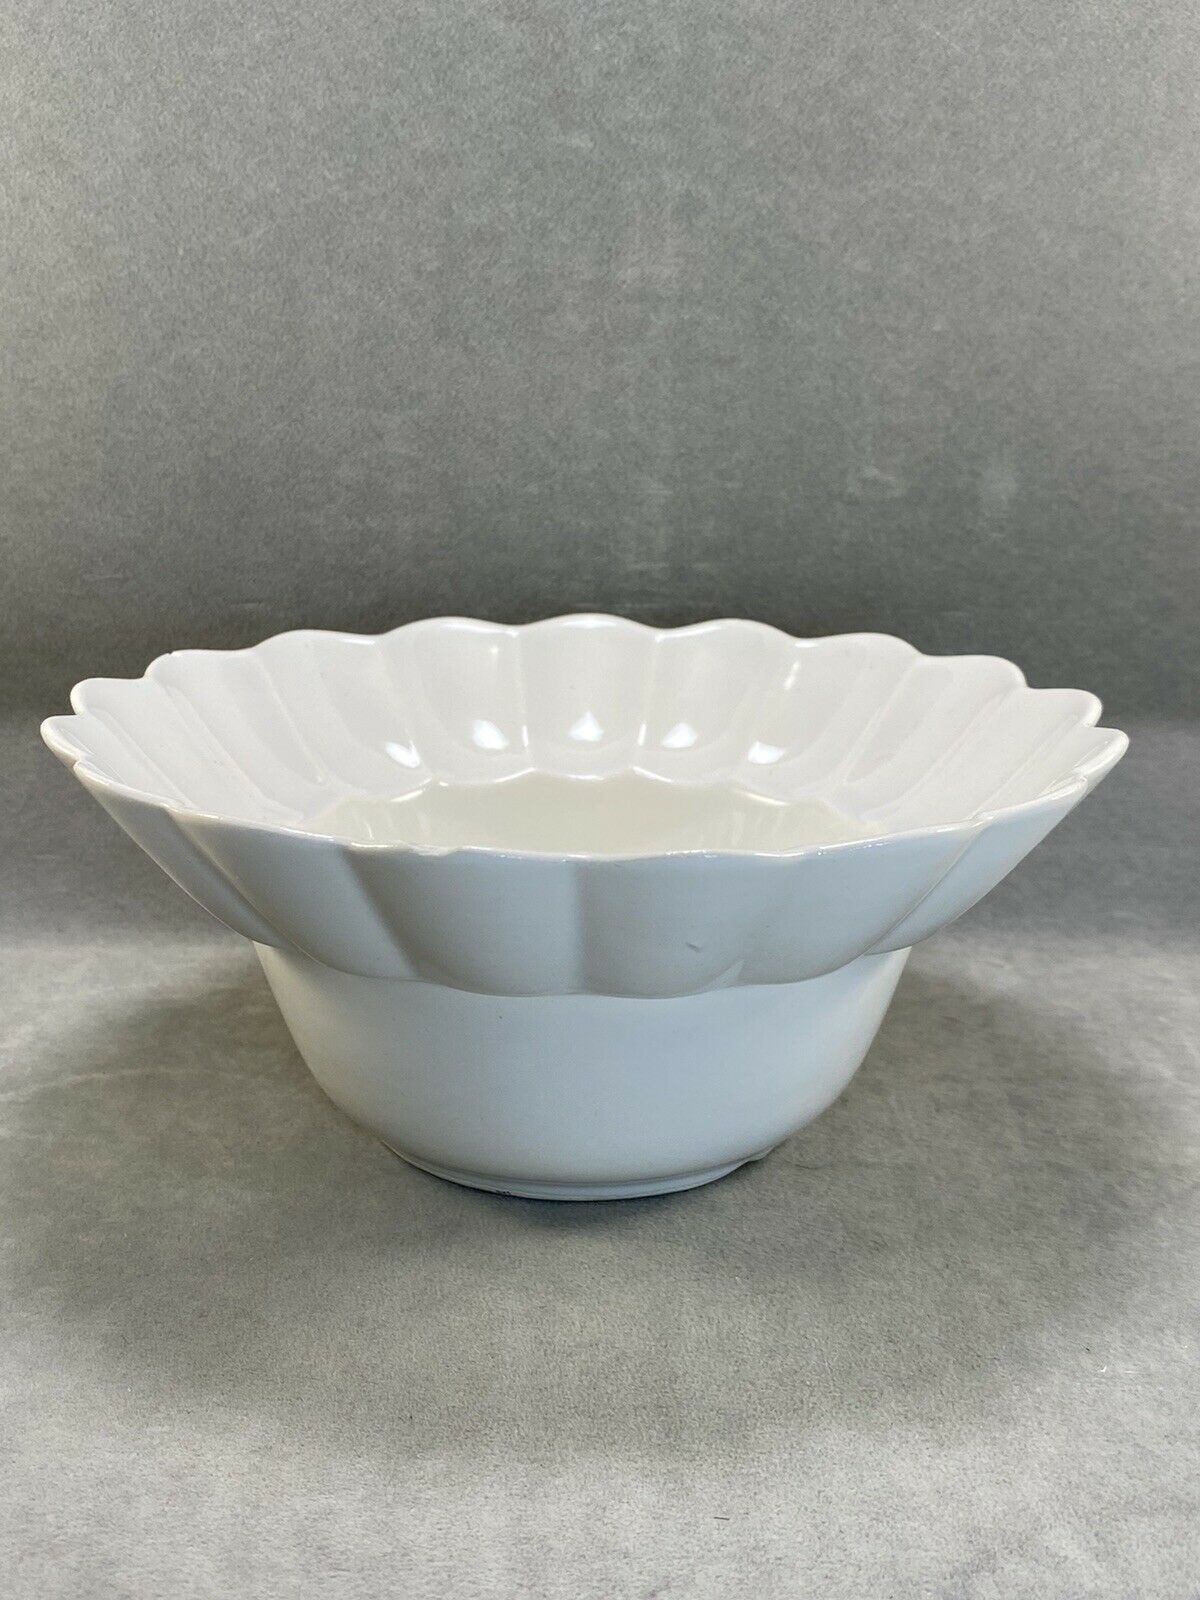 Vintage White California Pottery Center Bowl C614 For Lazy Susan Chip & Dip Set